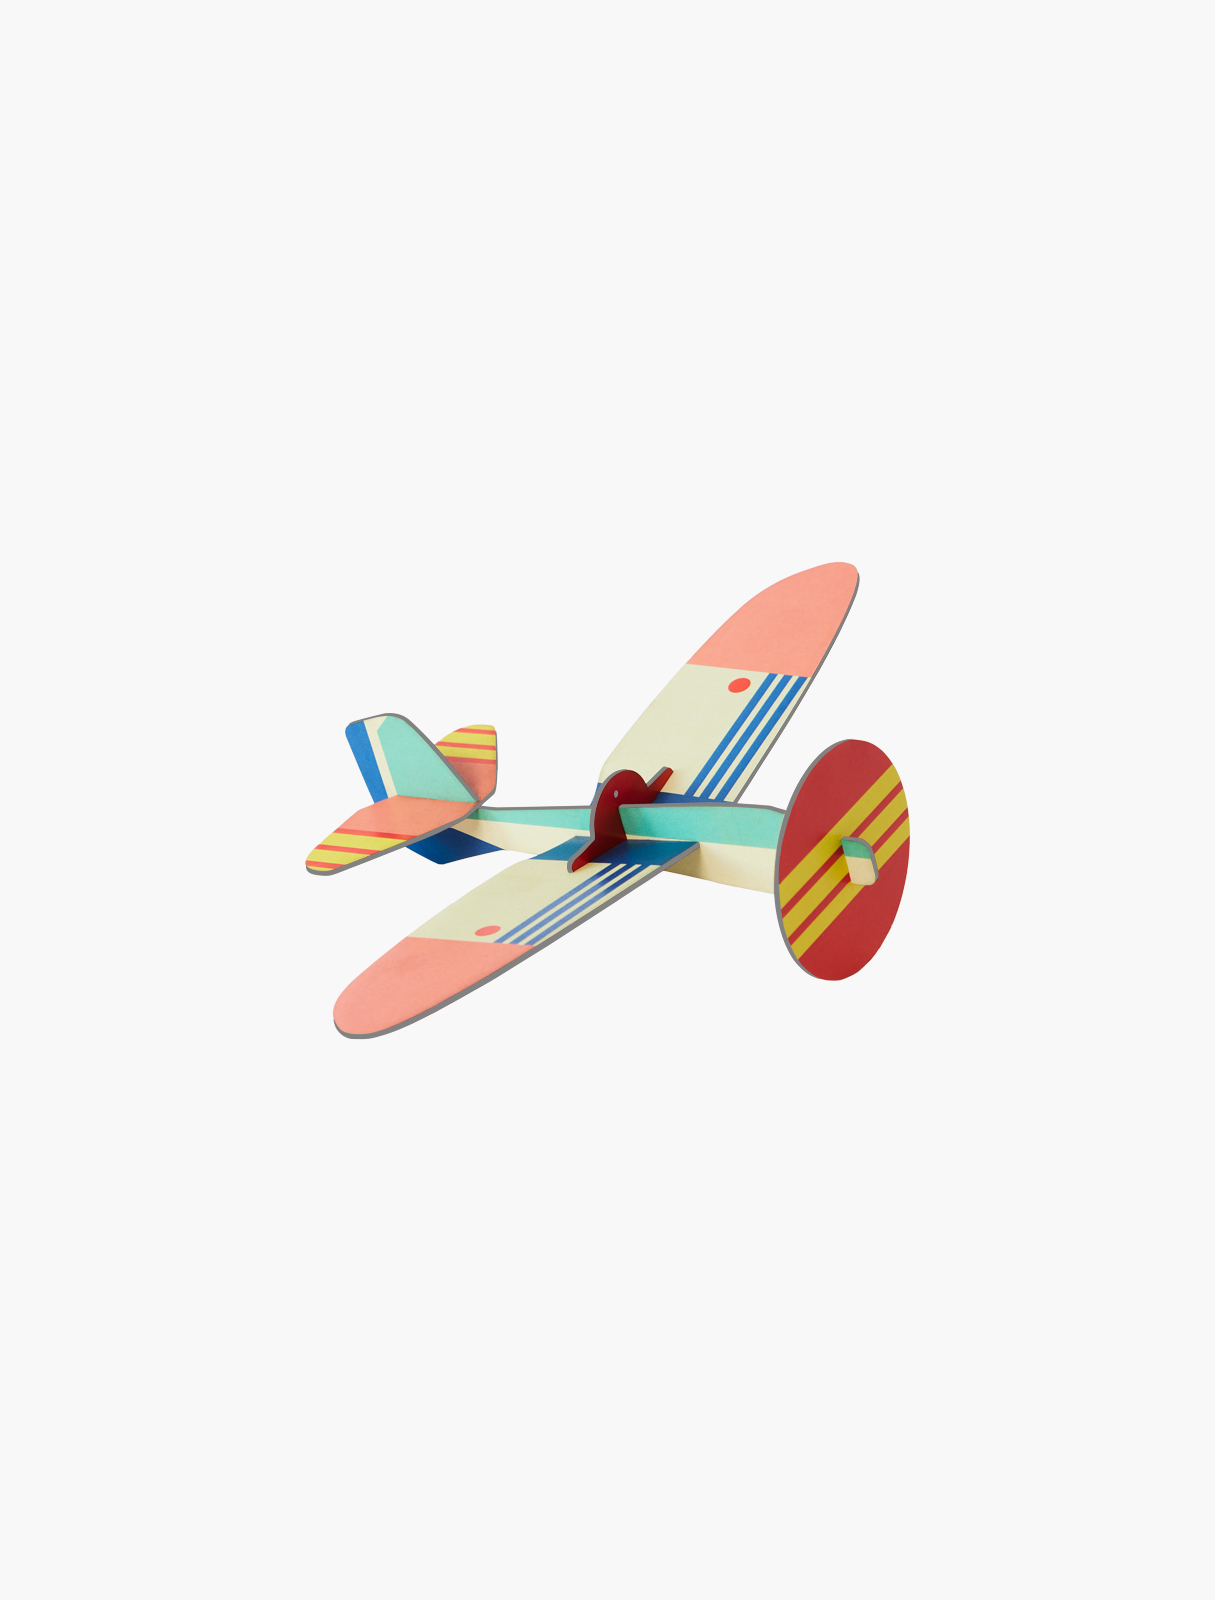 3D Propeller Plane